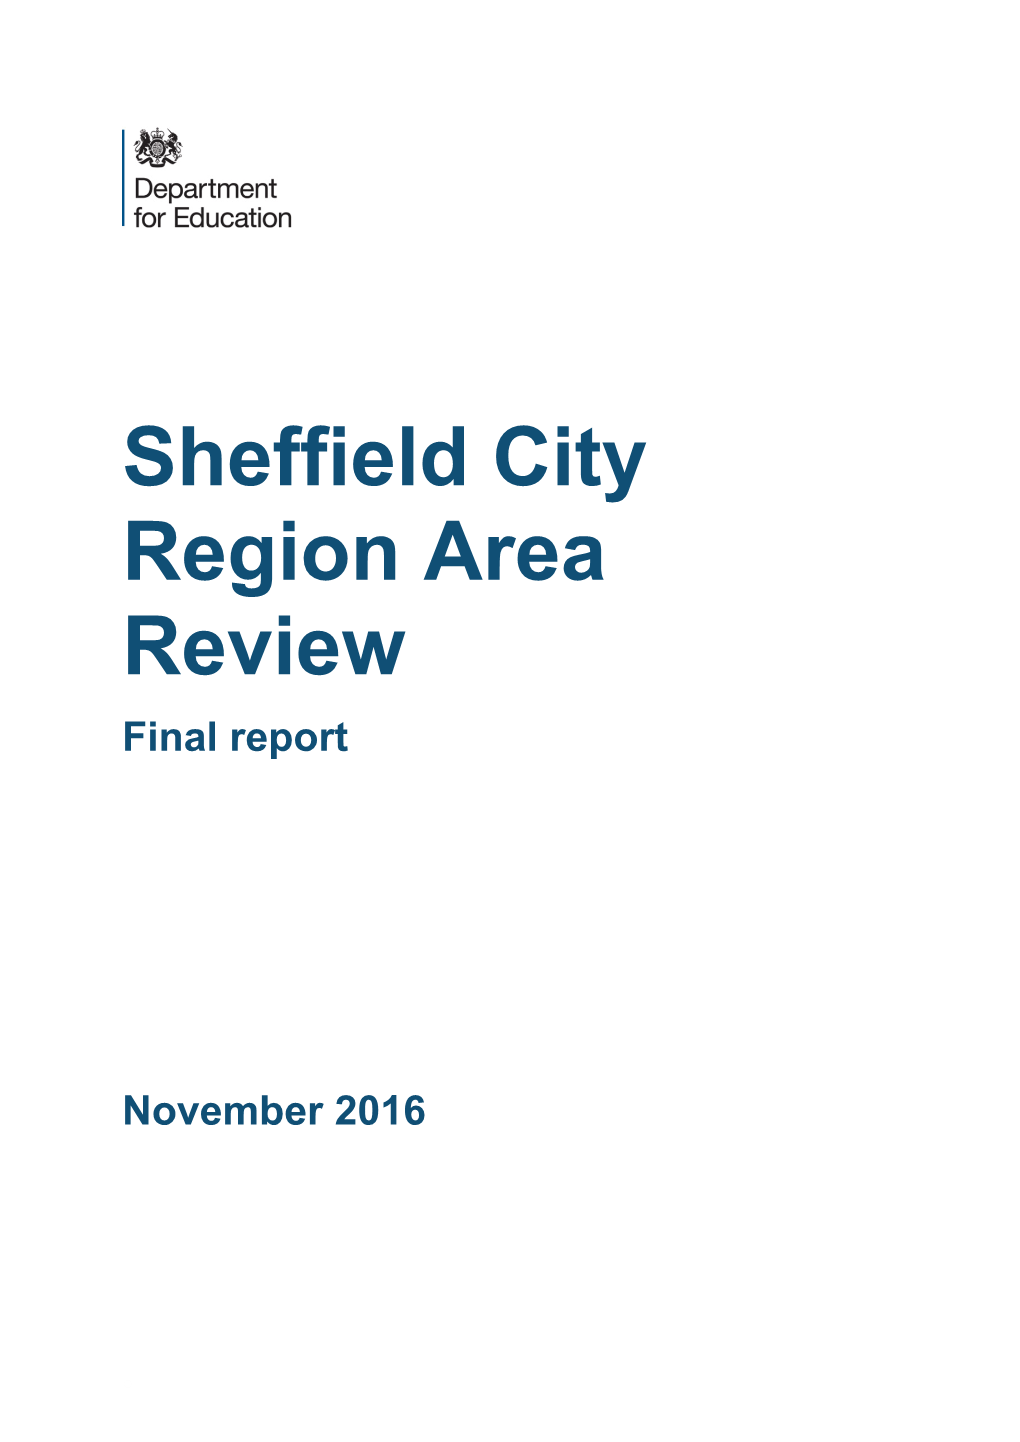 Sheffield City Region Area Review: Final Report